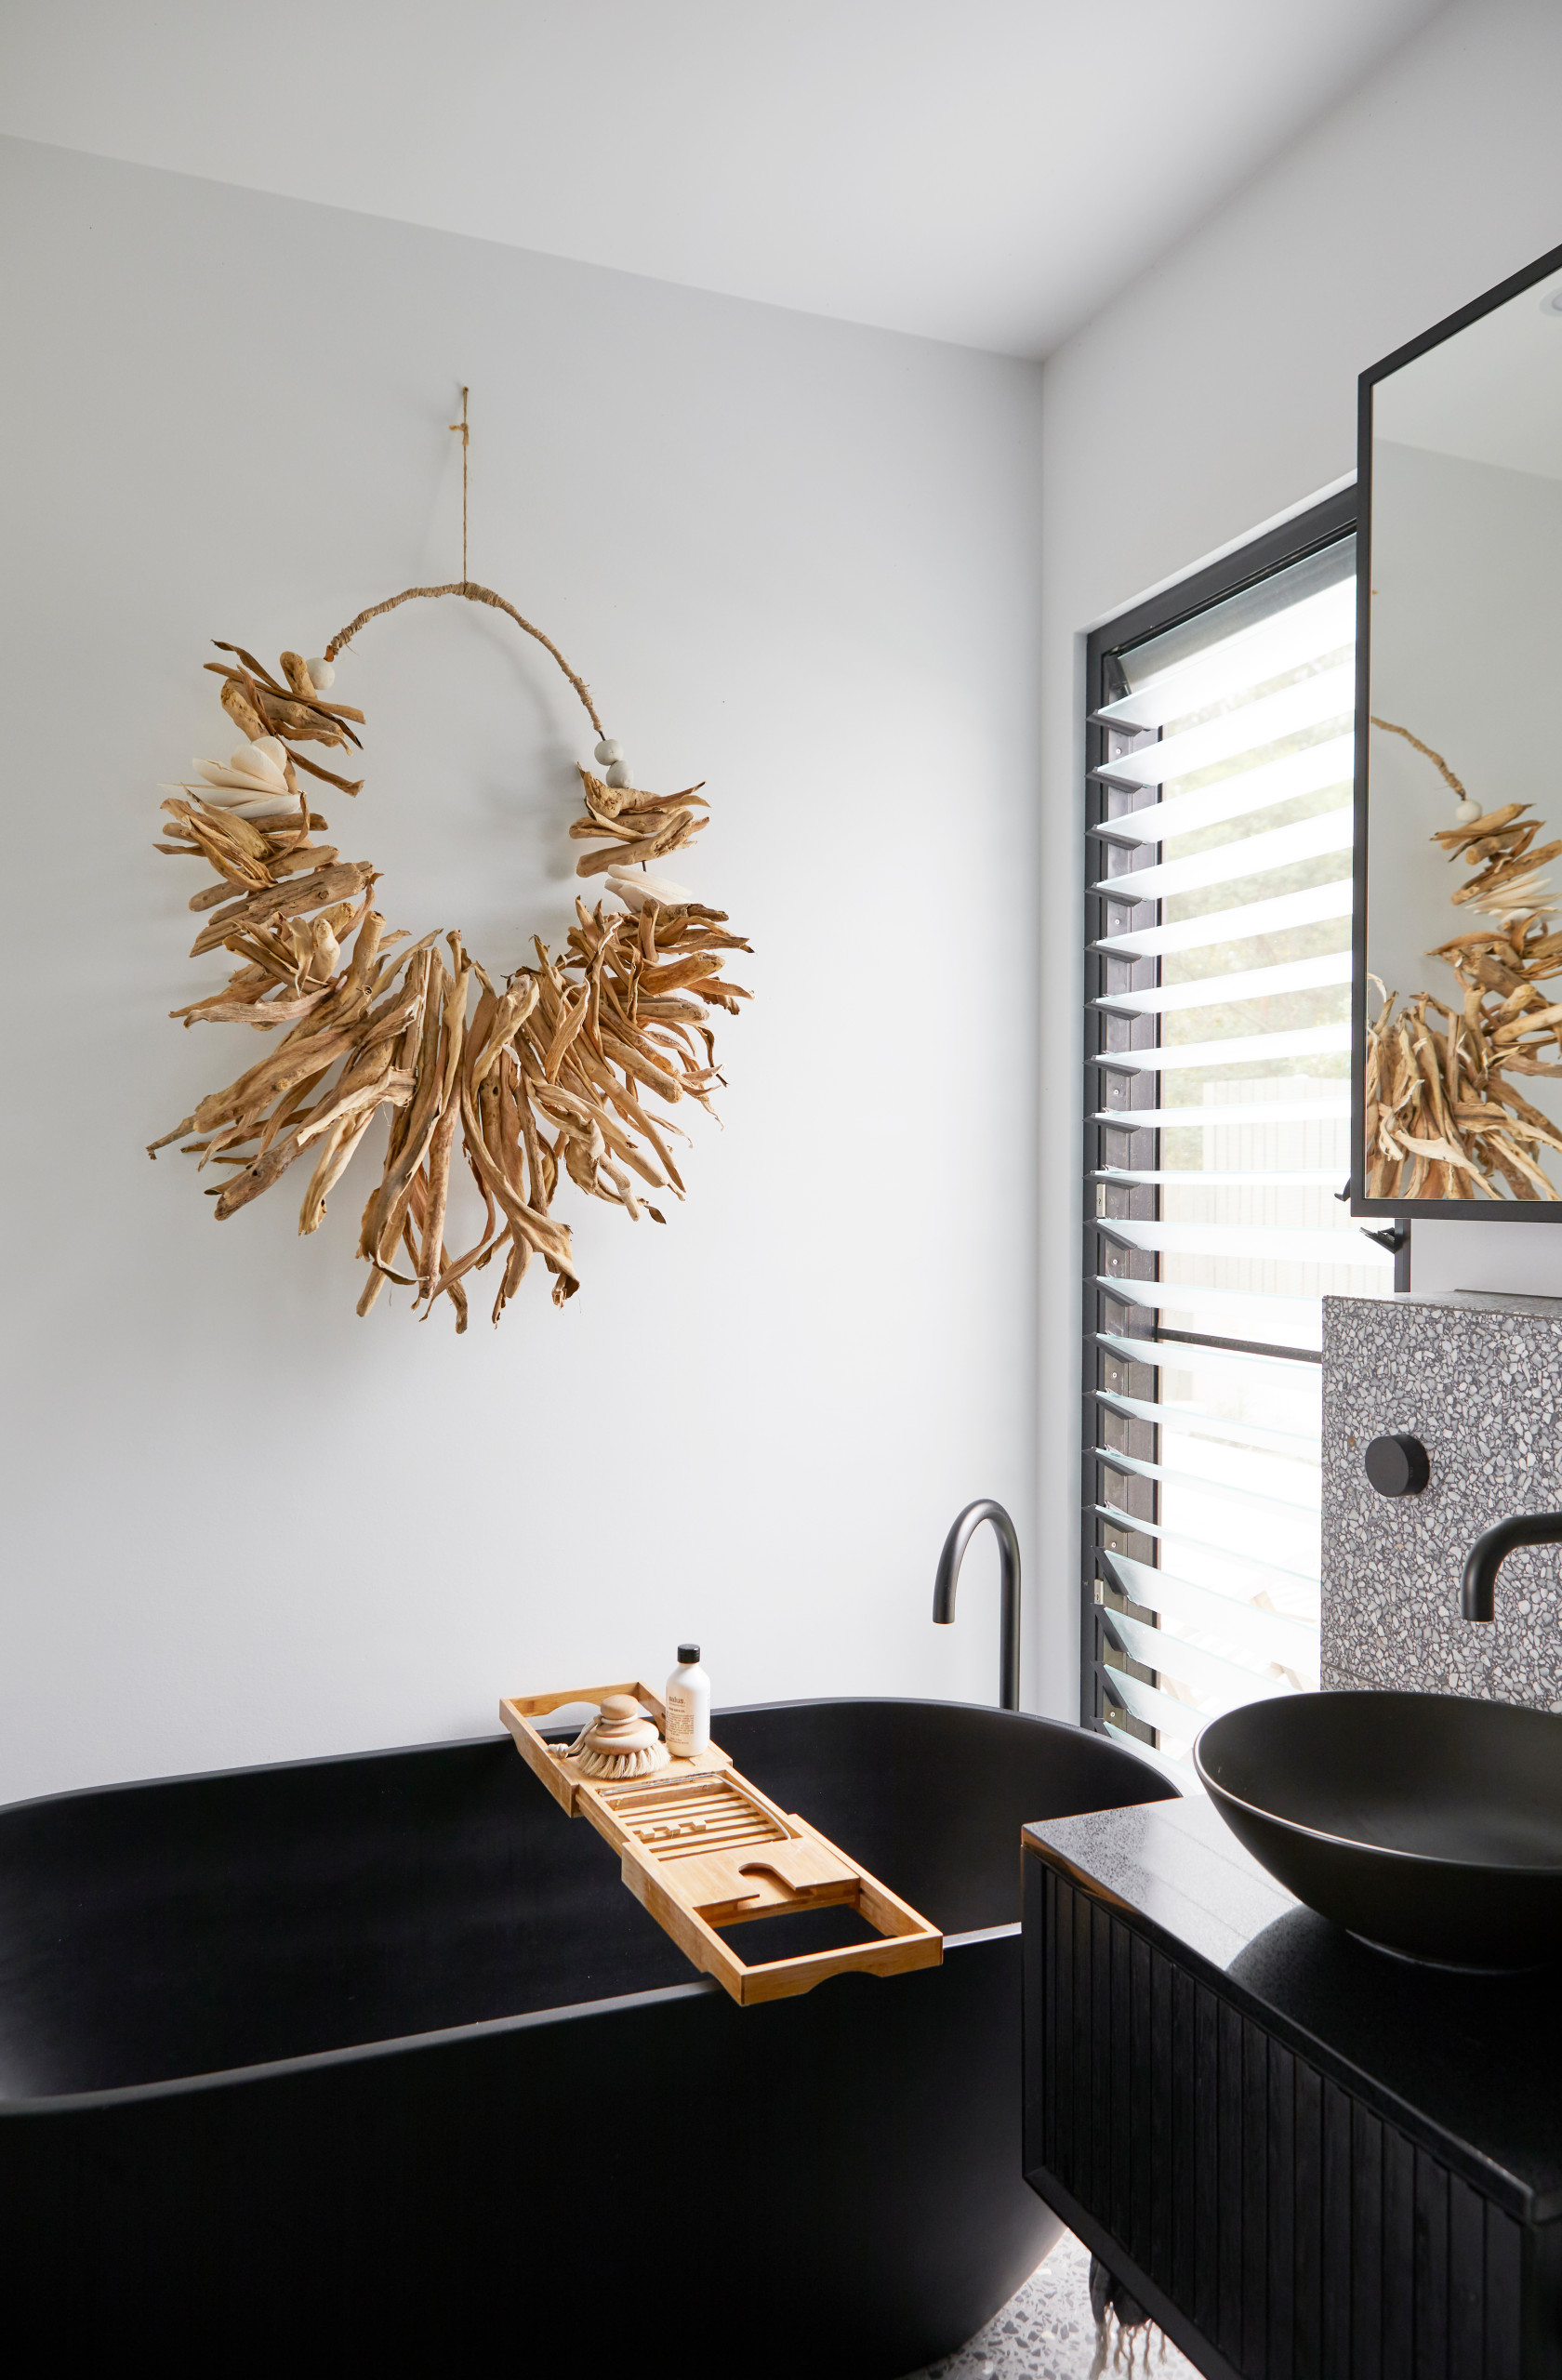 32 Beautiful Black-and-White Bathroom Ideas